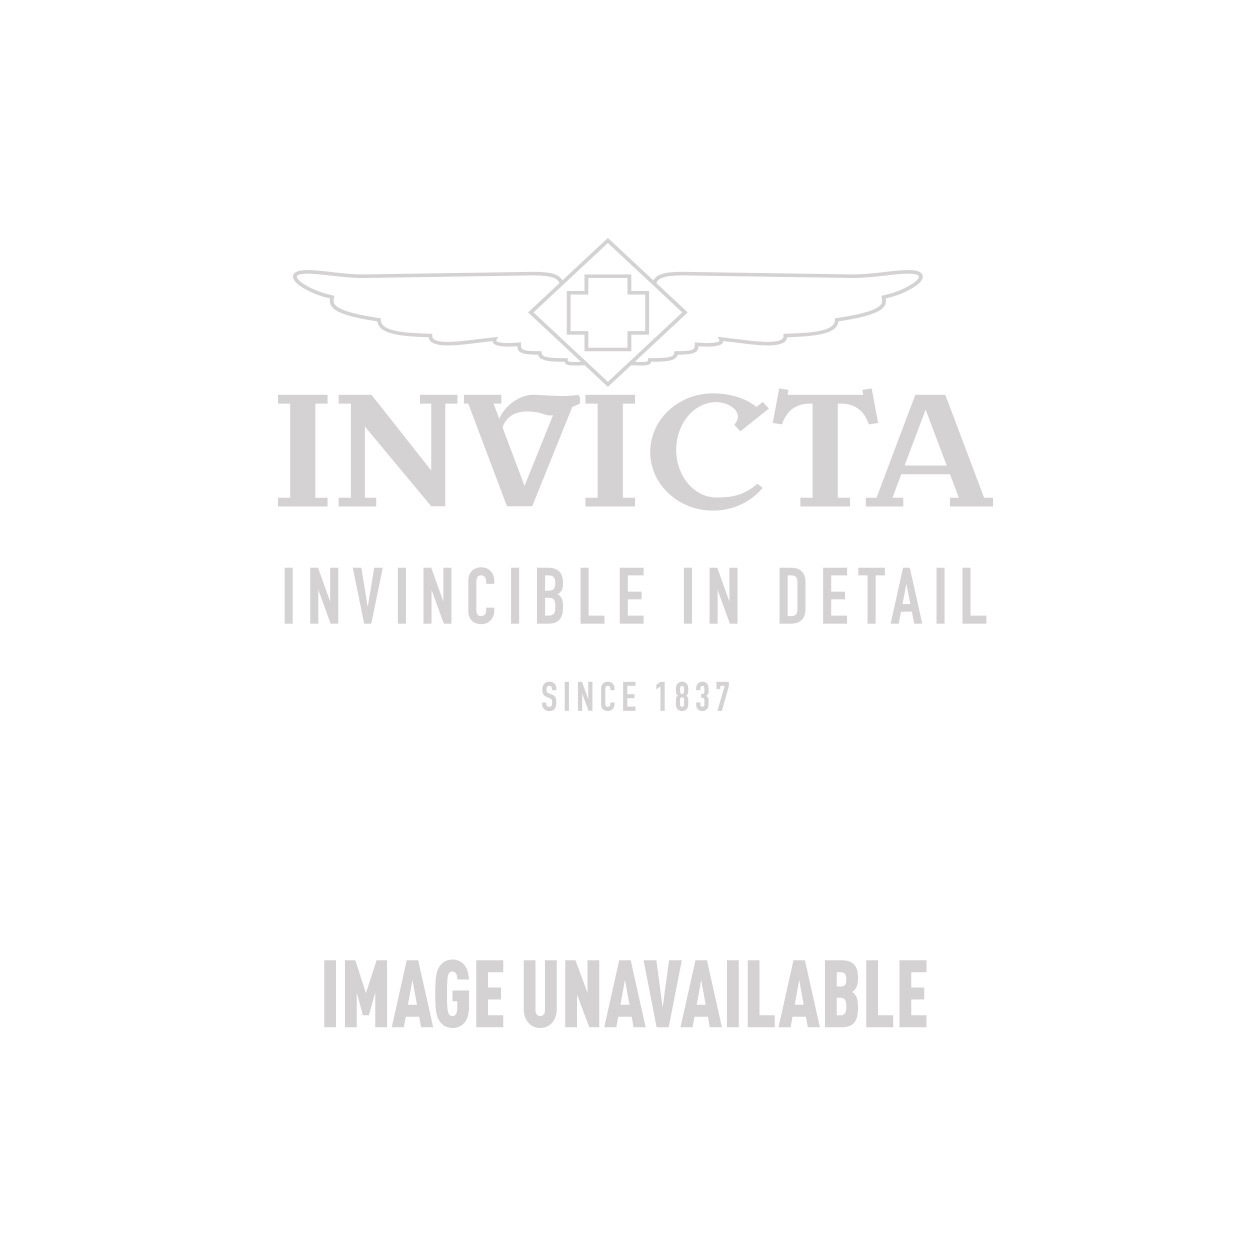 Invicta Disney Limited Edition Unisex Watches (Mod: 37850 